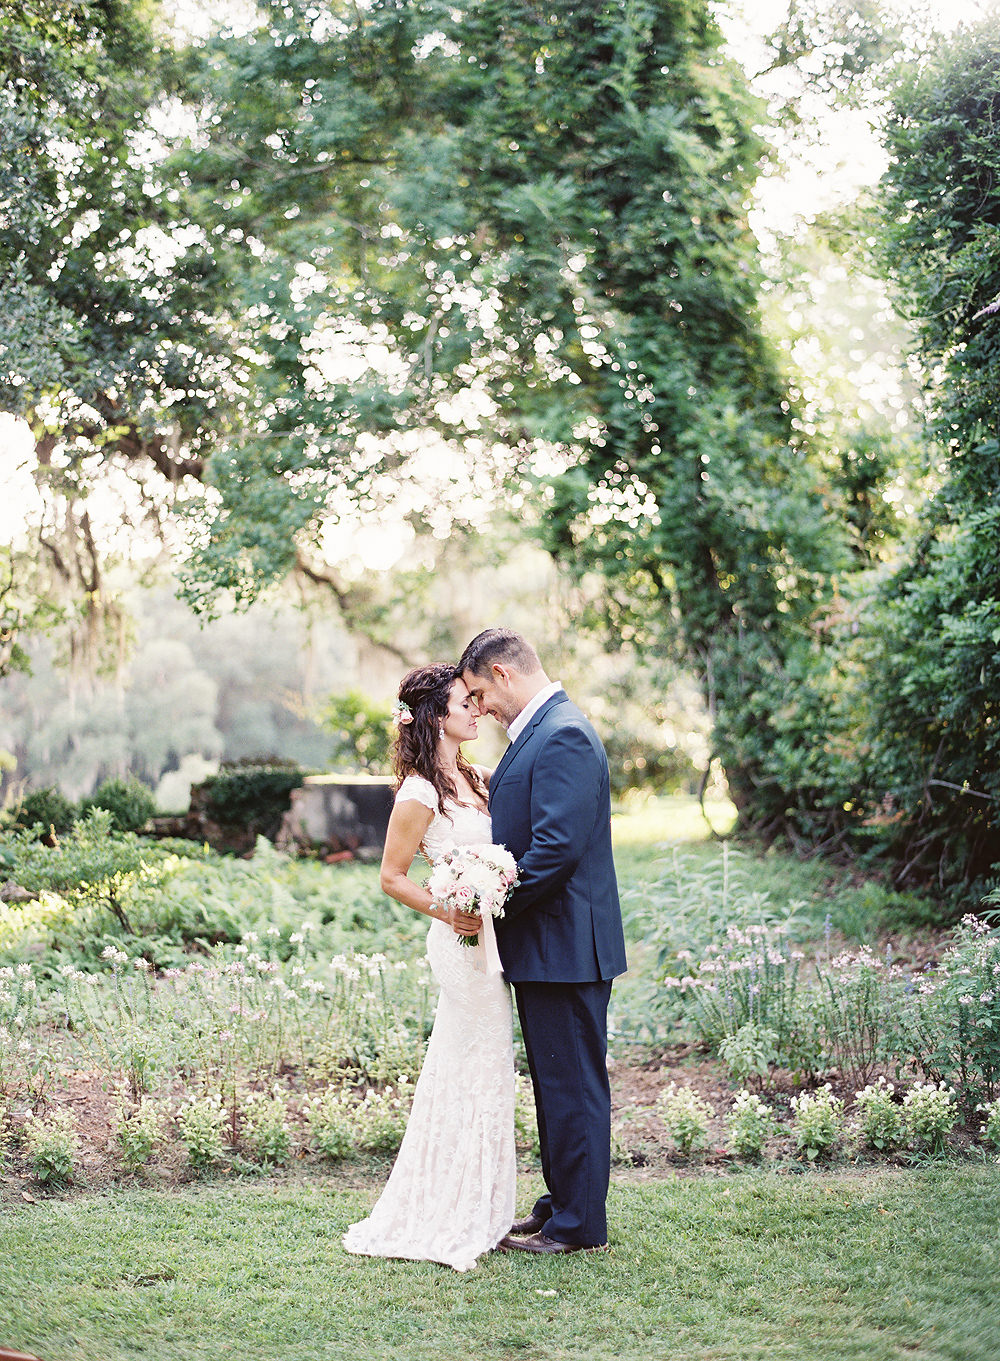 Afton Villa Gardens Film Wedding Photographs | Rachel & Lenny